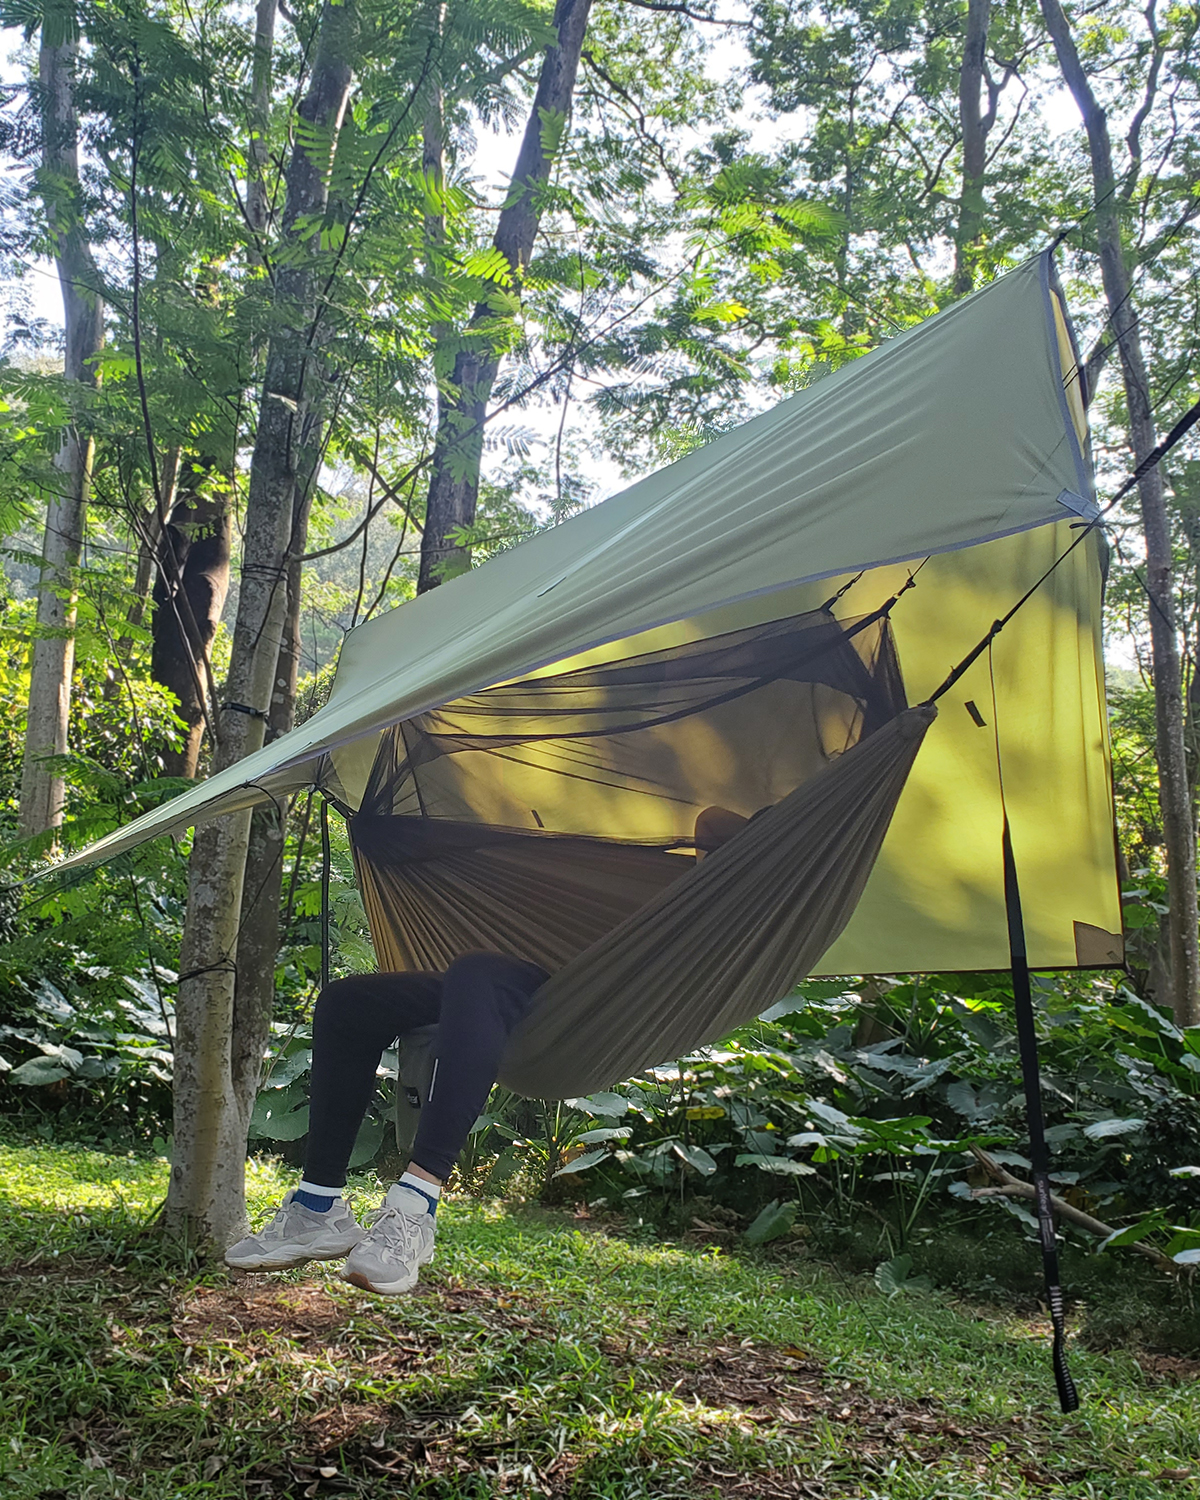 Sunyear Camping Hammock, Portable Double Hammock 78W*118L, Grey